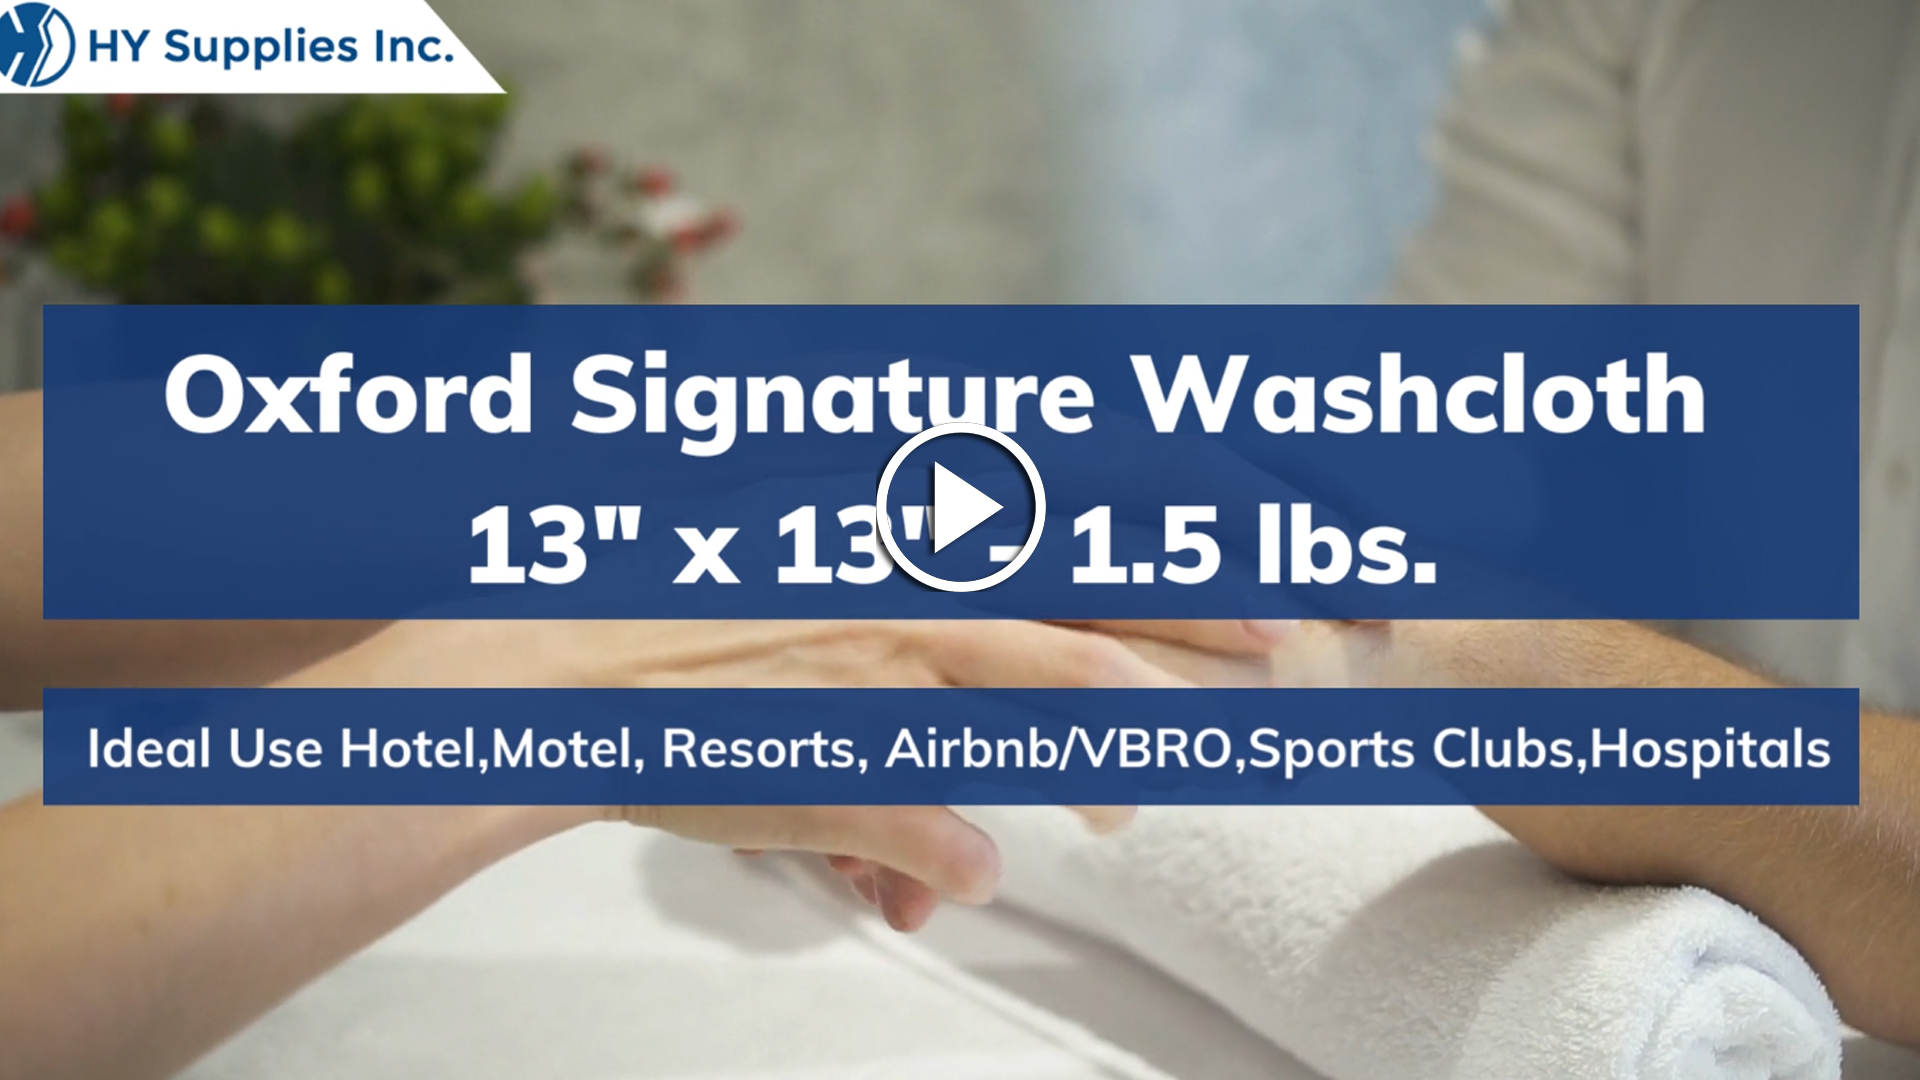 Oxford Signature Washcloth - 13"x 13" - 1.5 lbs.